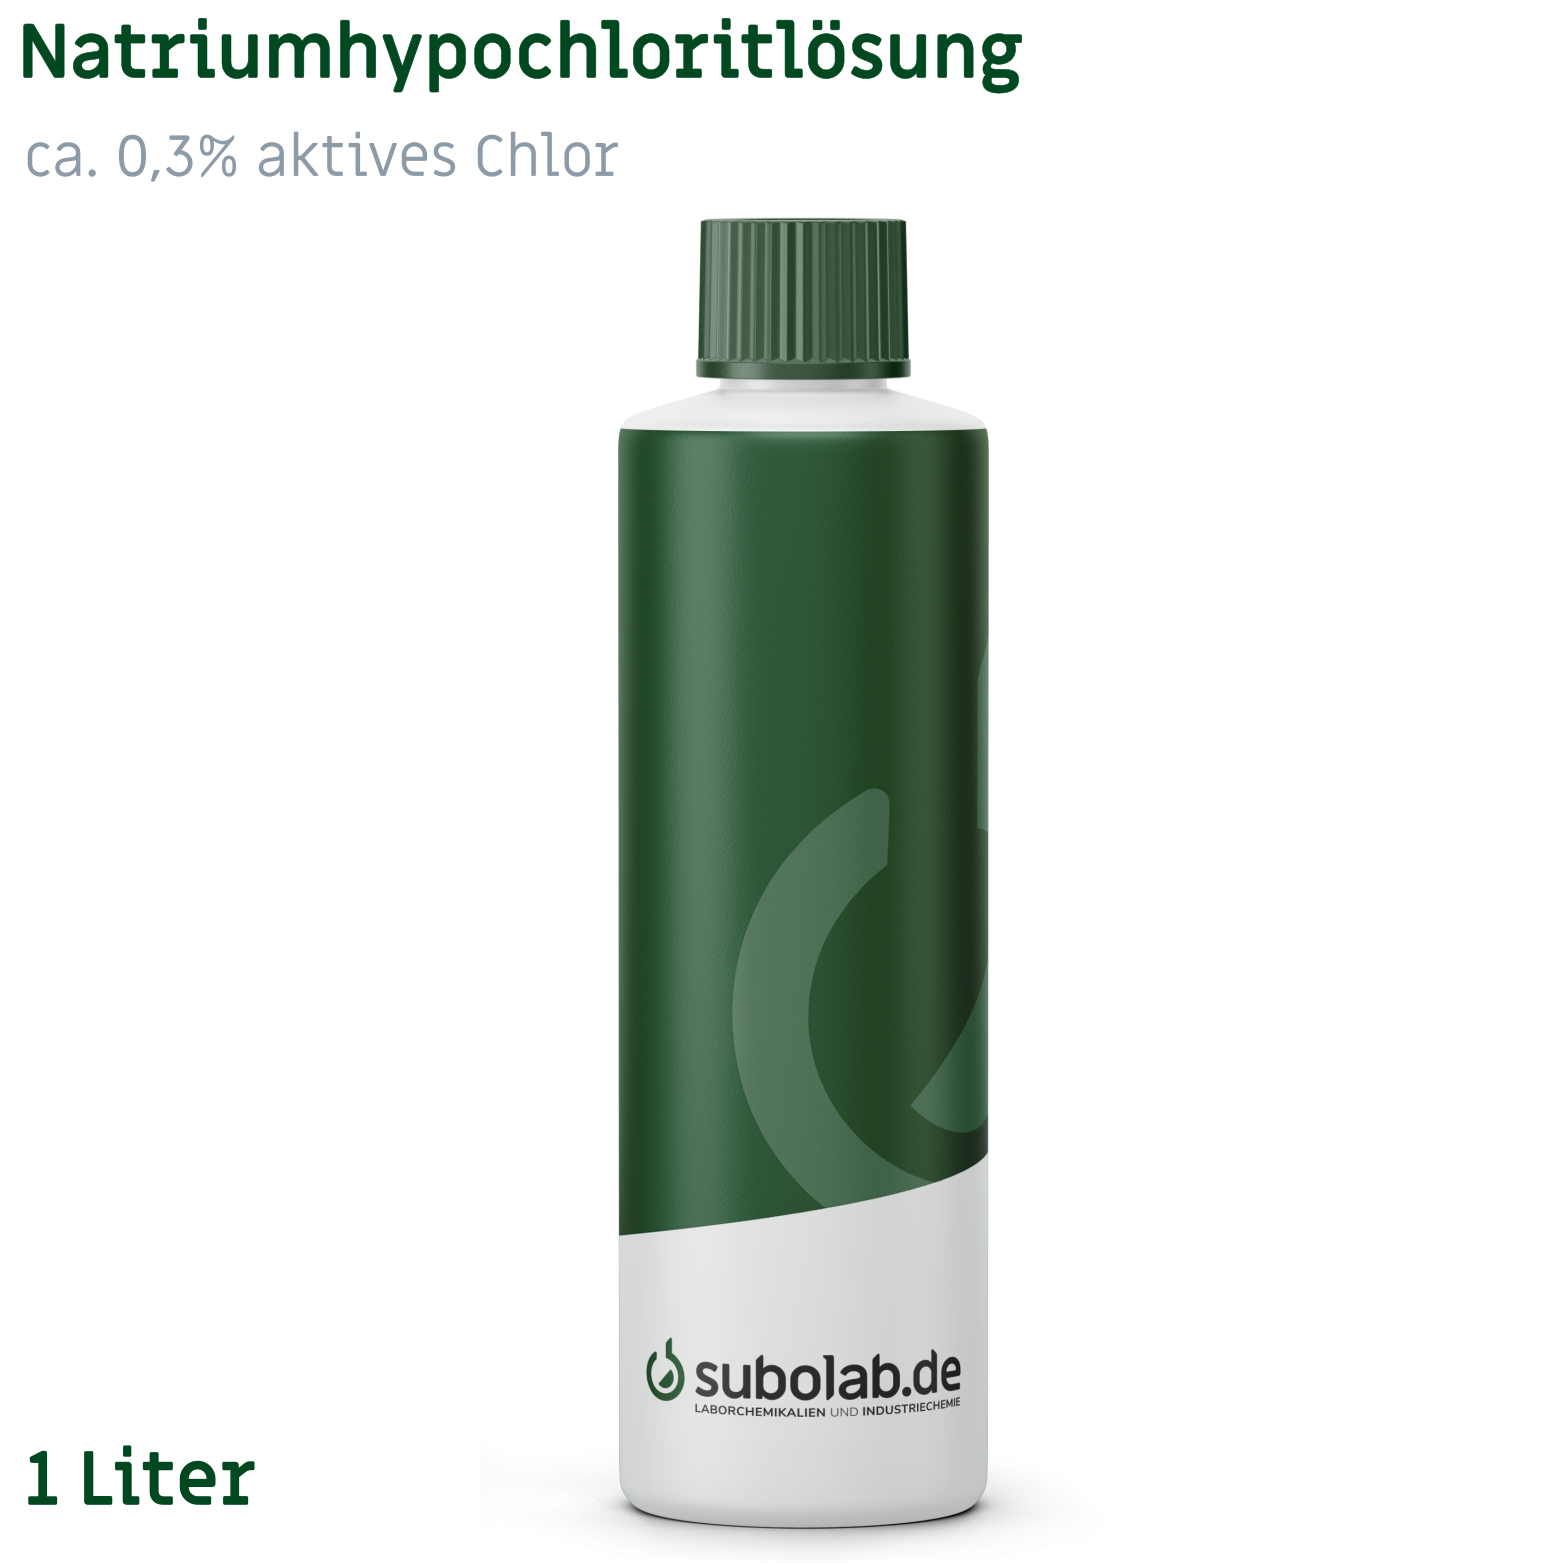 Bild von Natriumhypochloritlösung ca. 0,3% aktives Chlor (1 Liter)